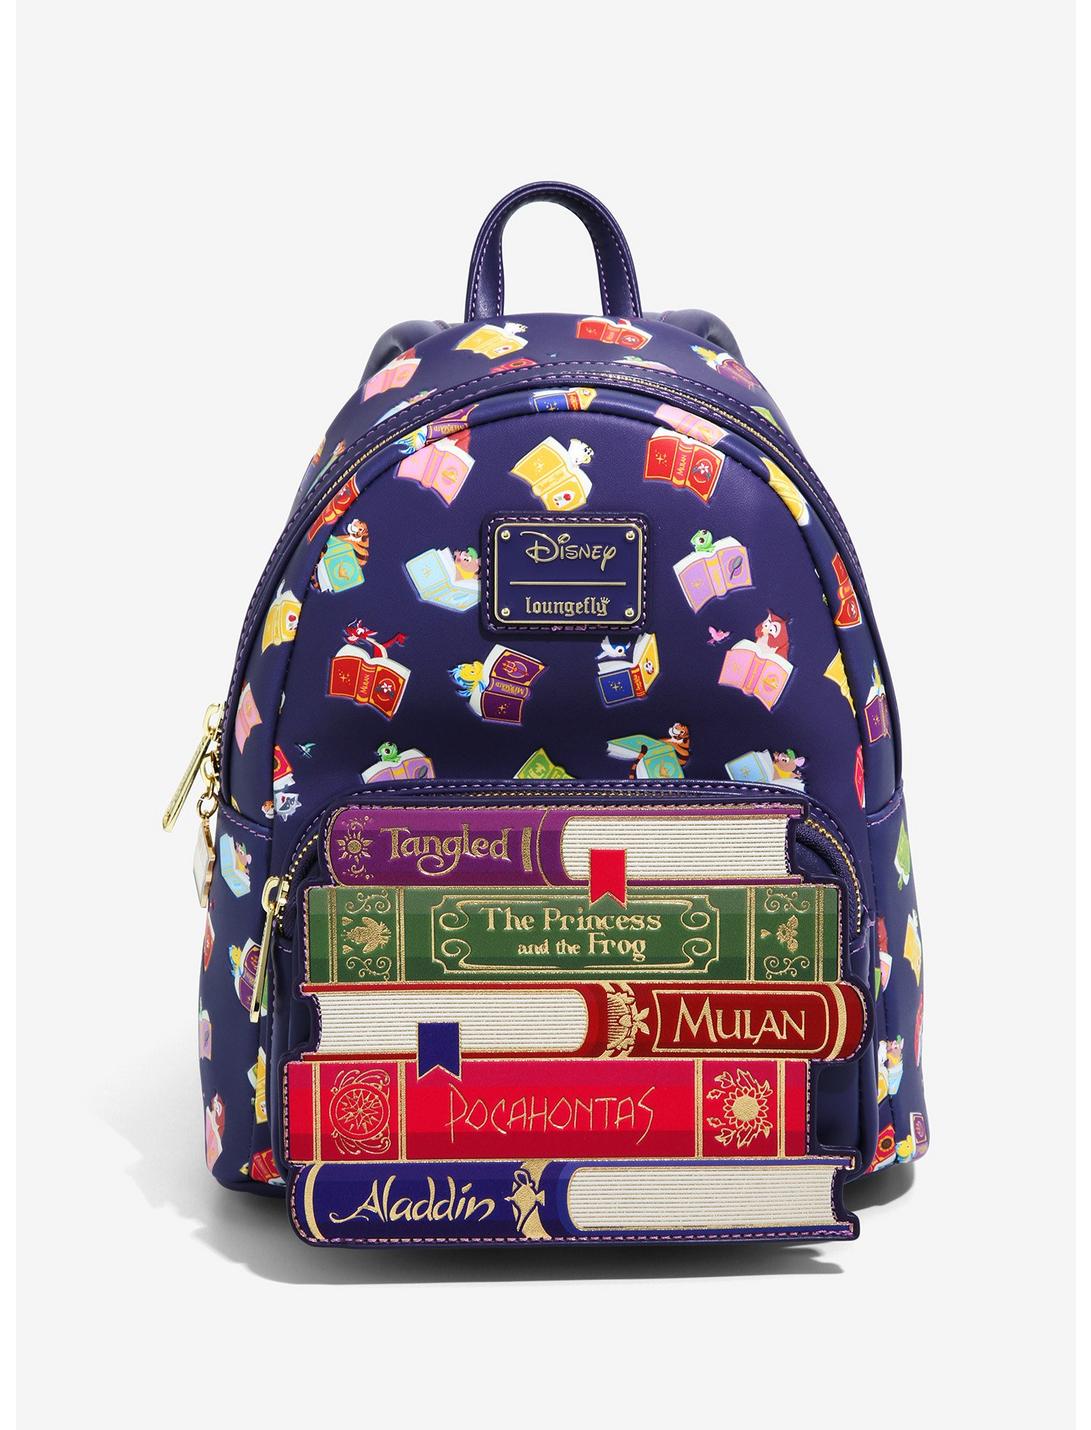 Loungefly Disney Movies Books Mini Backpack